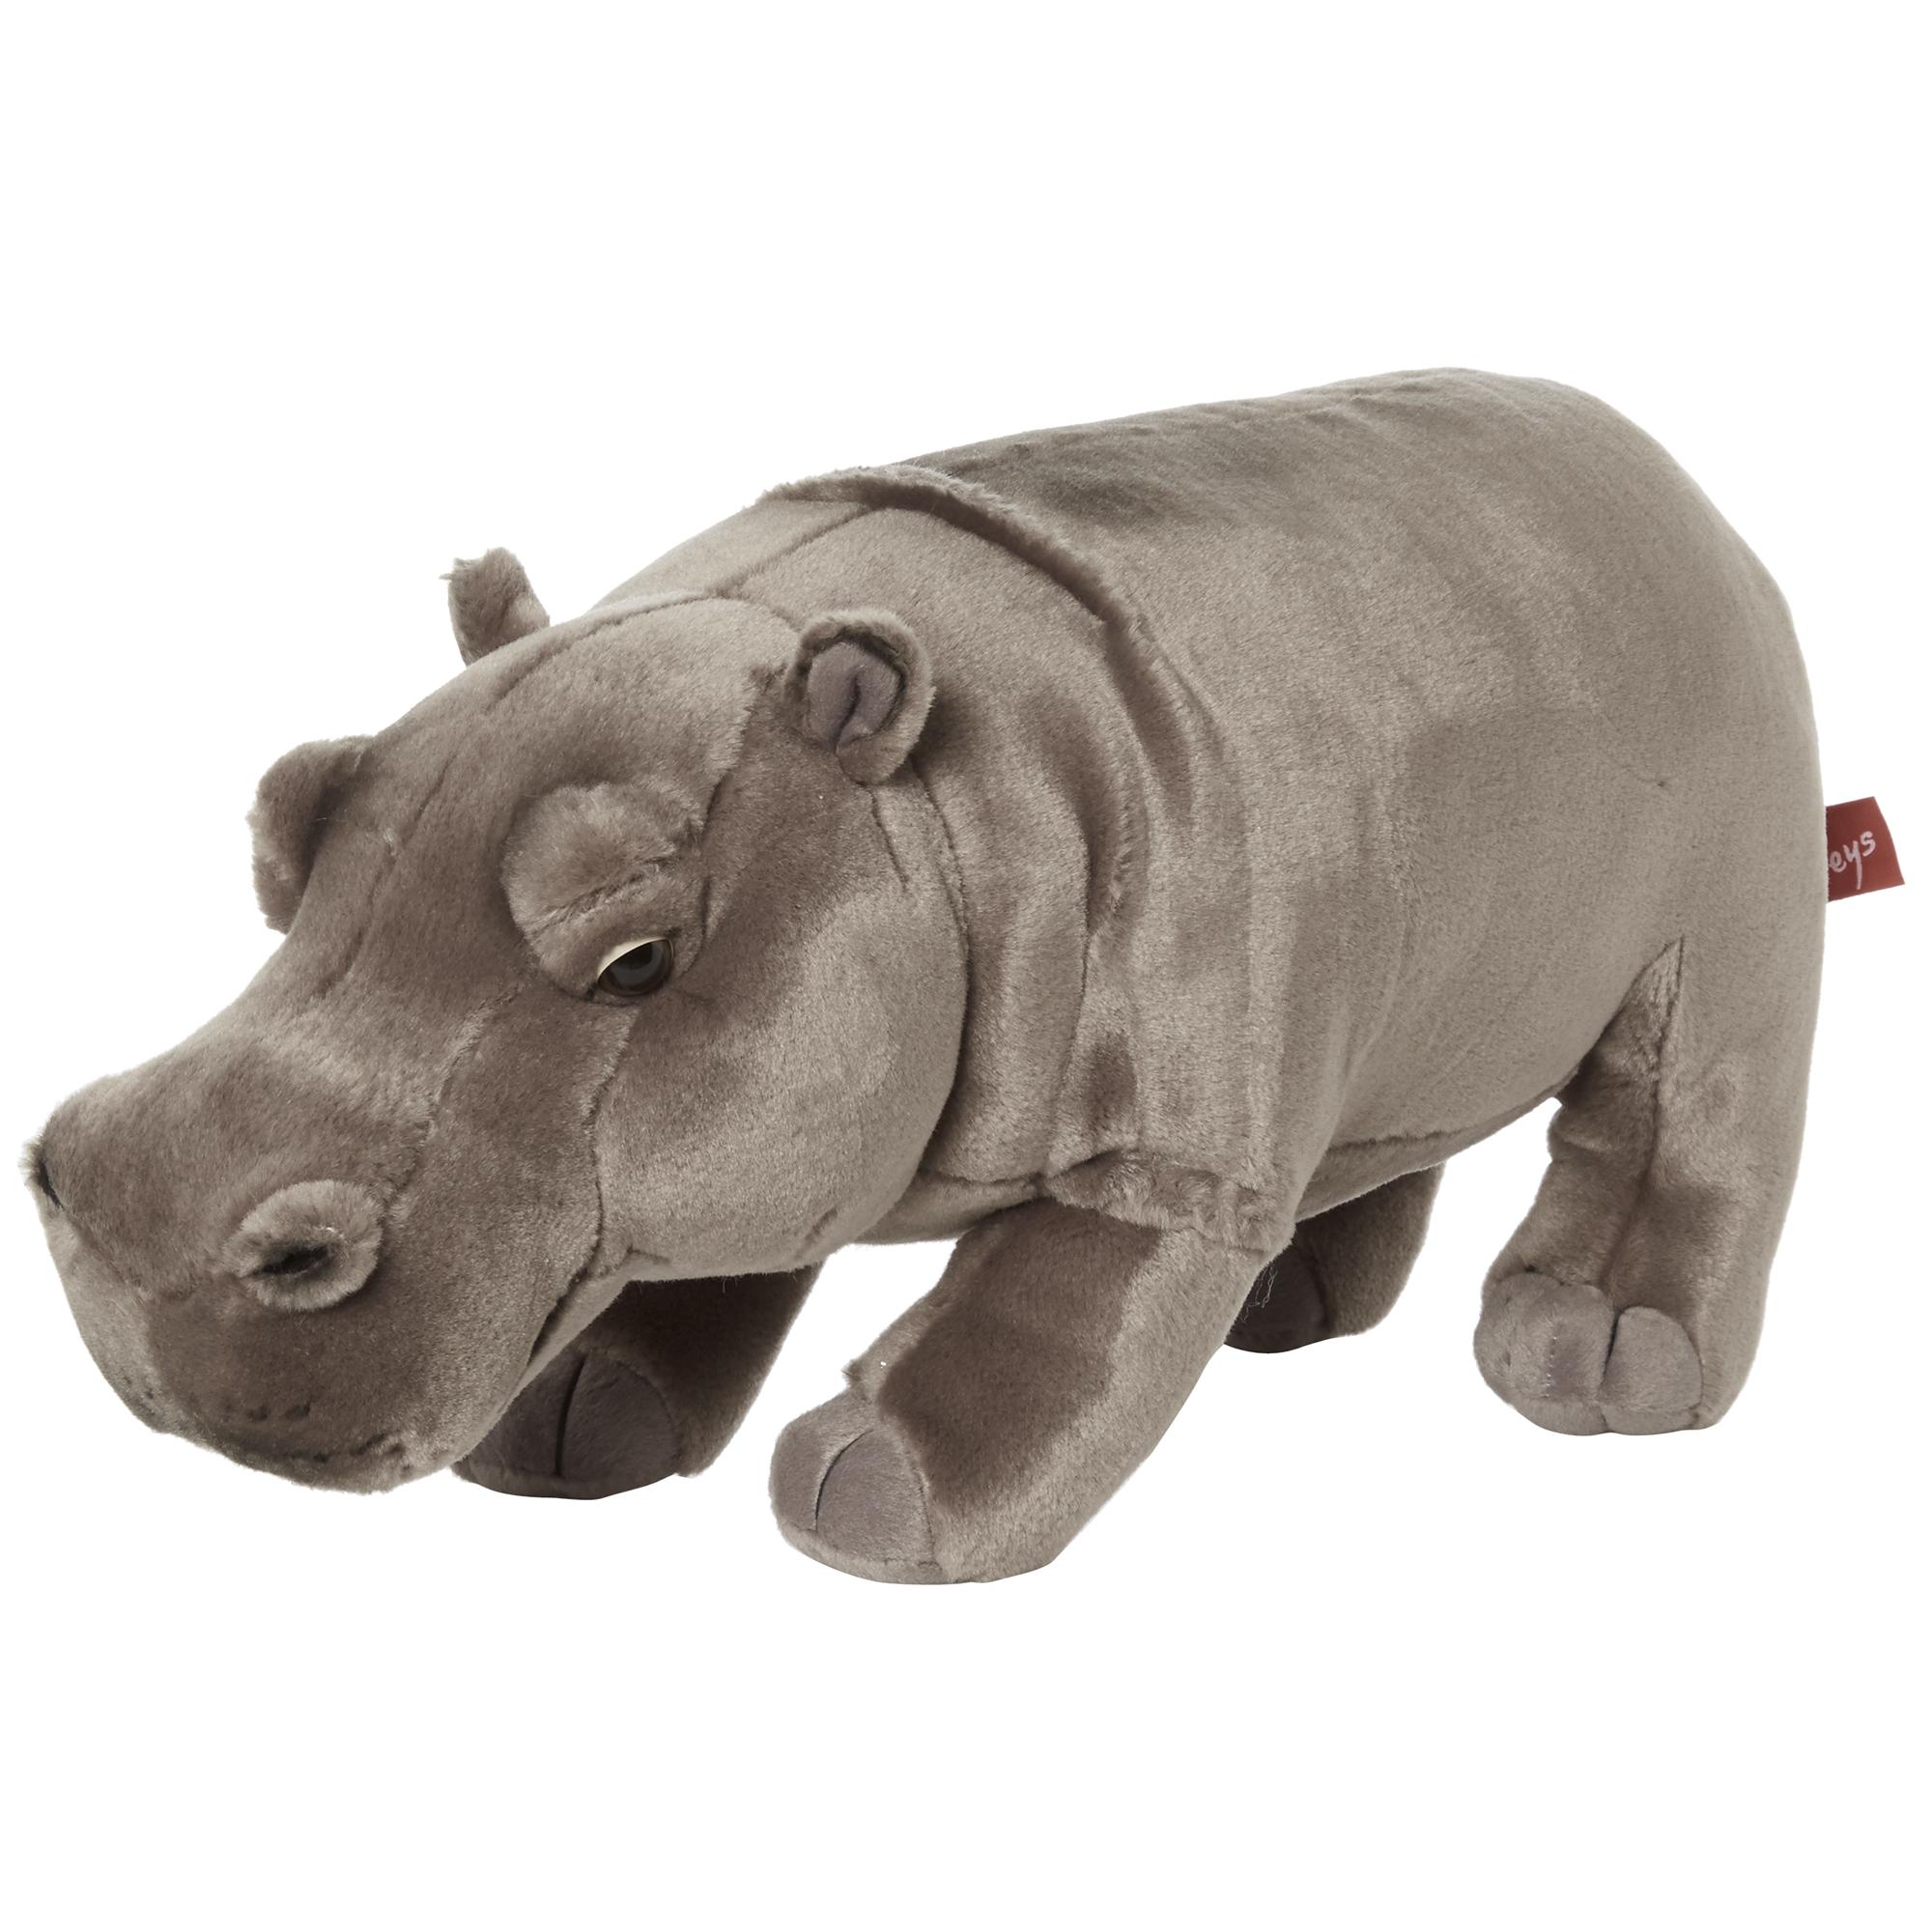 Hamleys Hollie Hippo Soft Toy - £35.00 - Hamleys for Toys and Games